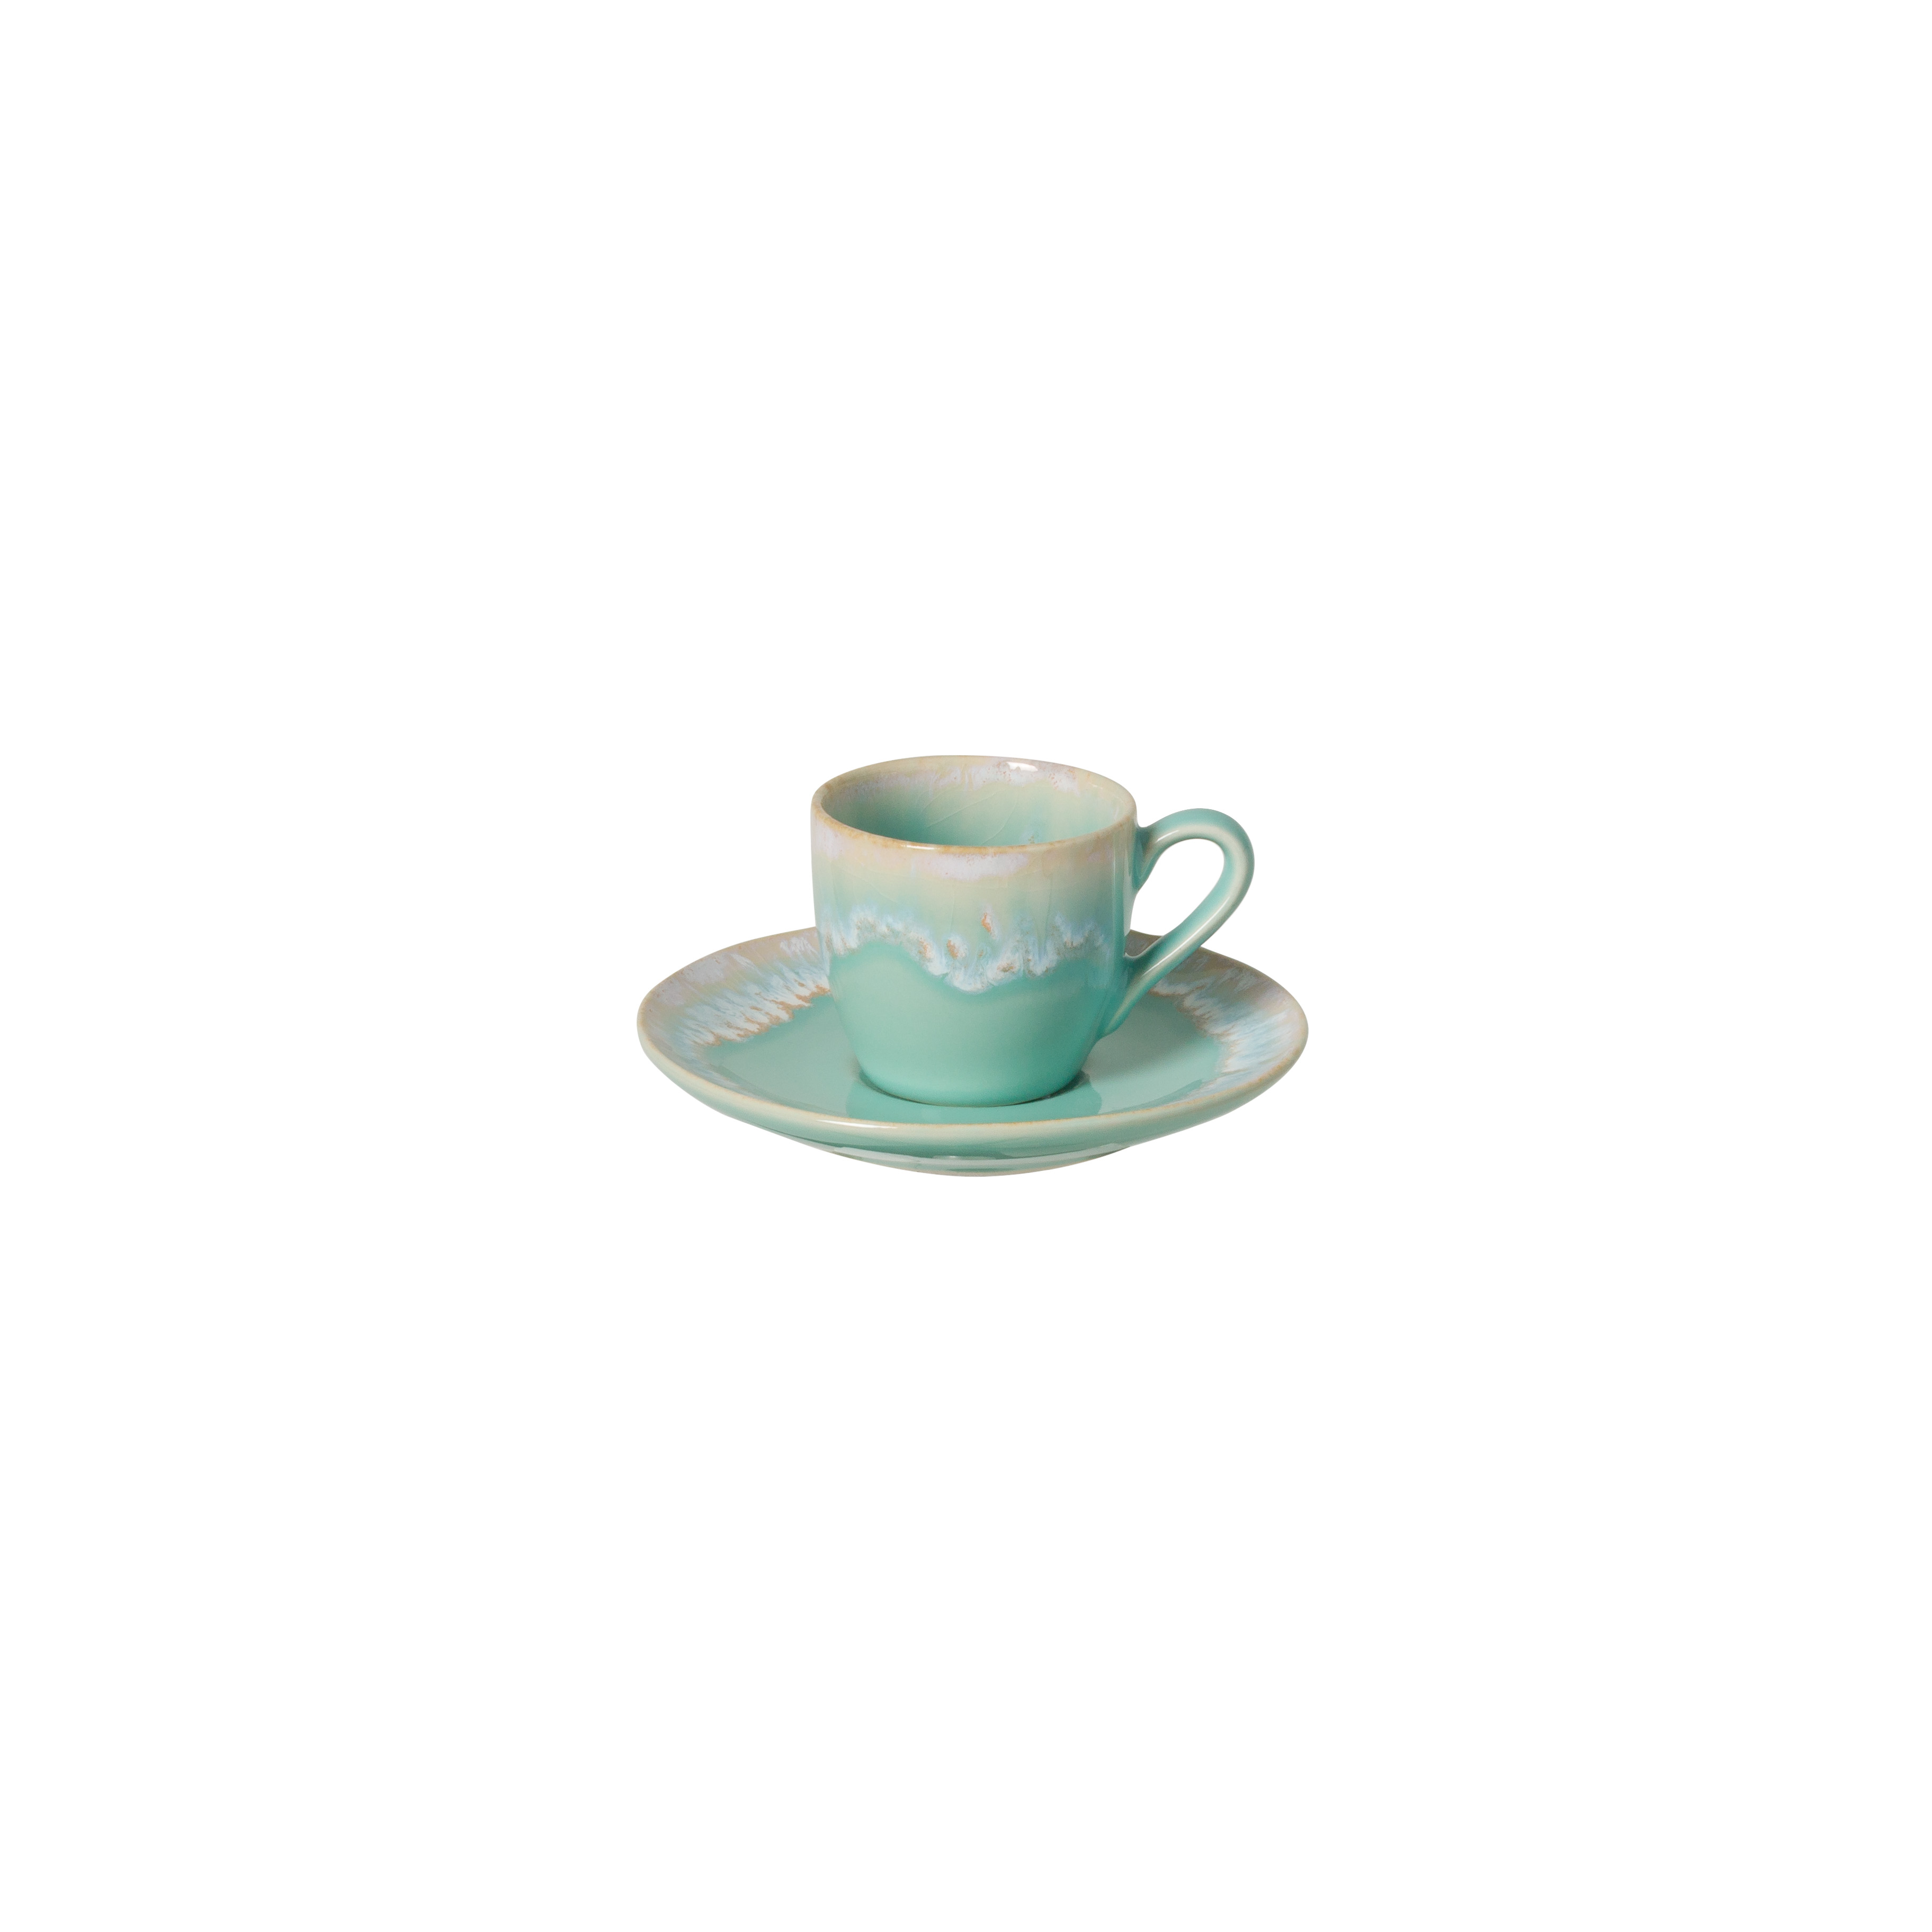 Taormina Aqua Coffee Cup And Saucer 0.1l Gift